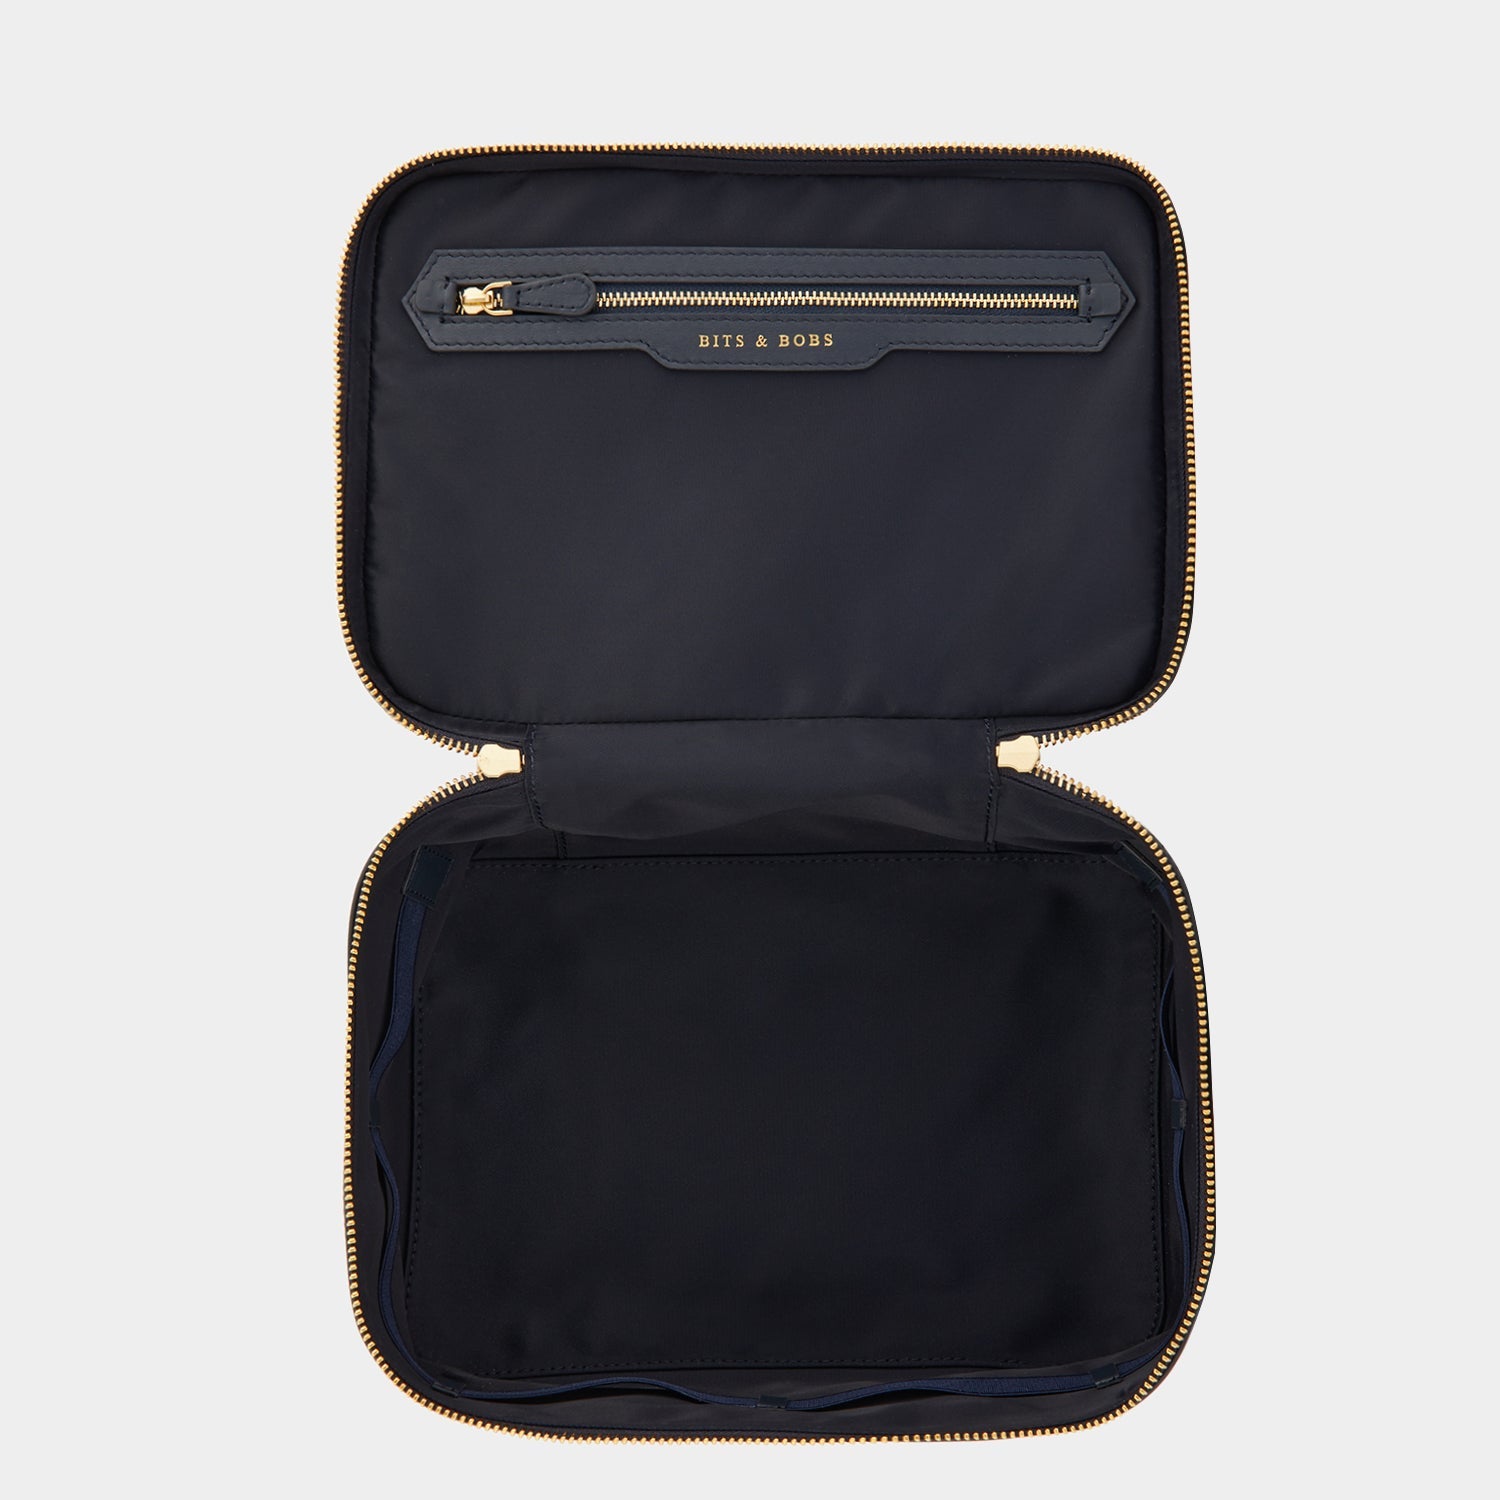 Logo Vanity Kit -

                  
                    Jacquard Nylon in Marine -
                  

                  Anya Hindmarch US
